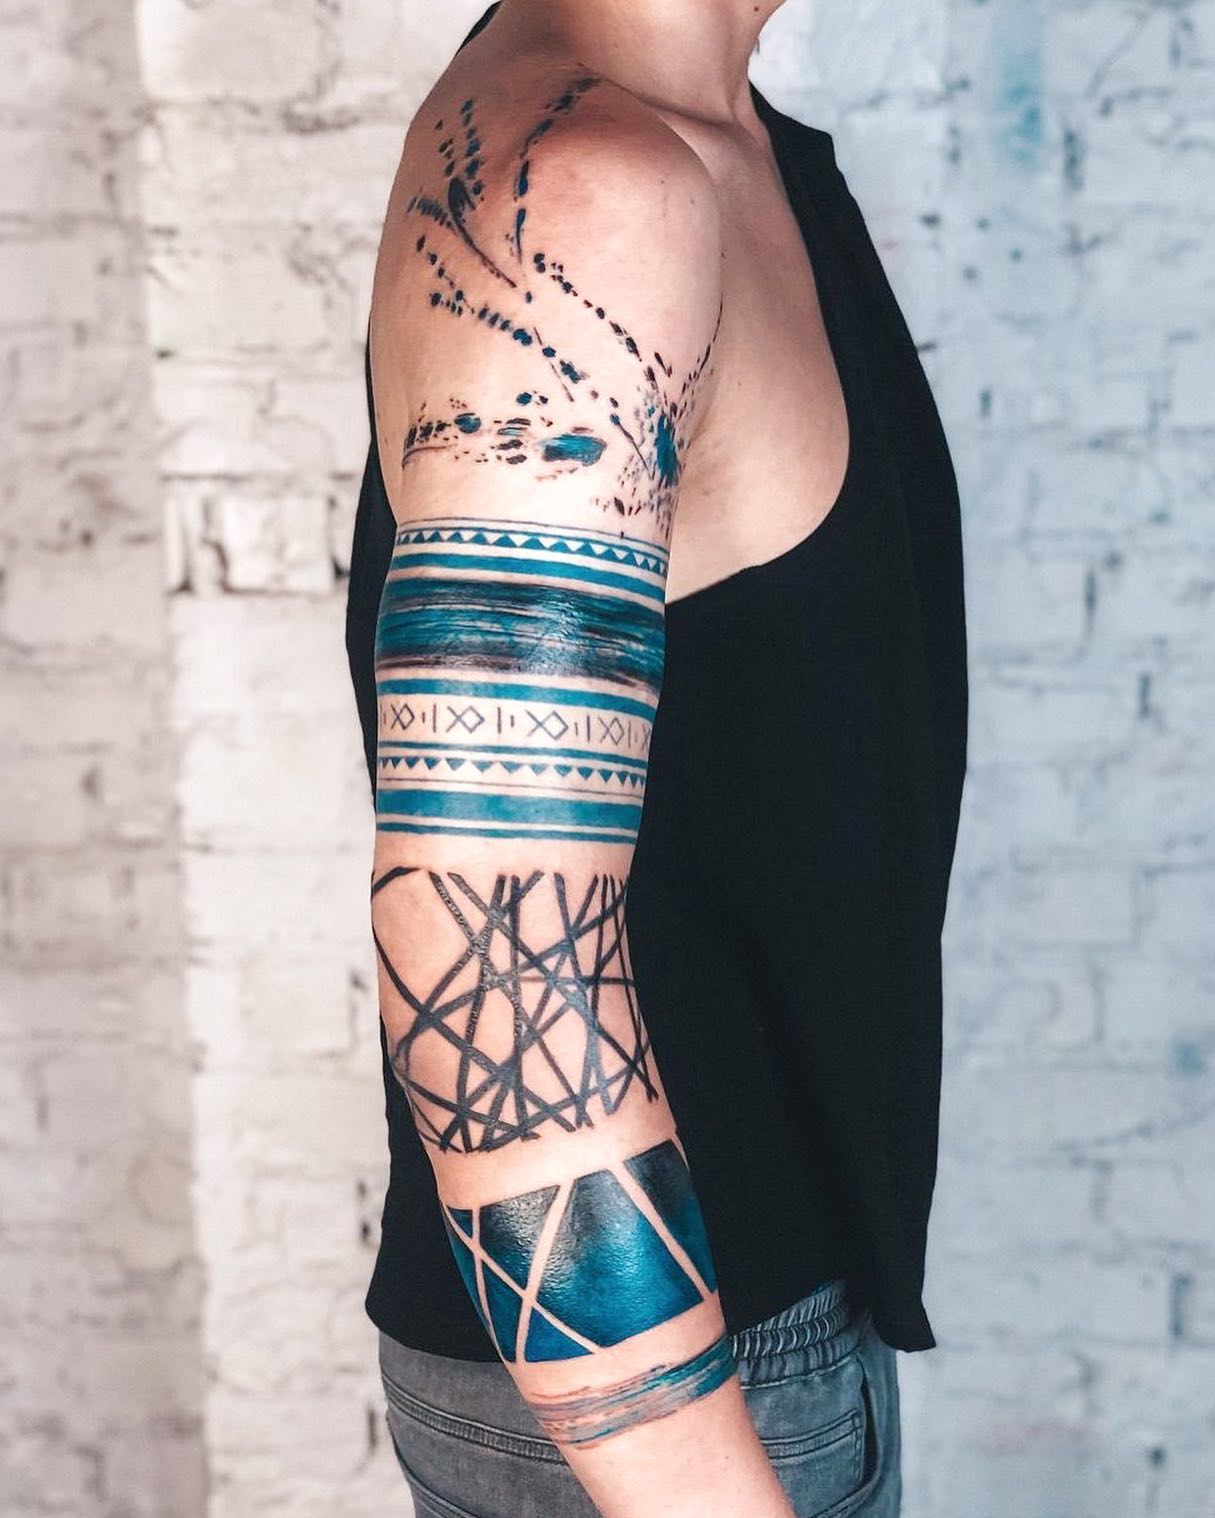 Solid Black Armband Temporary Tattoo Sticker - OhMyTat